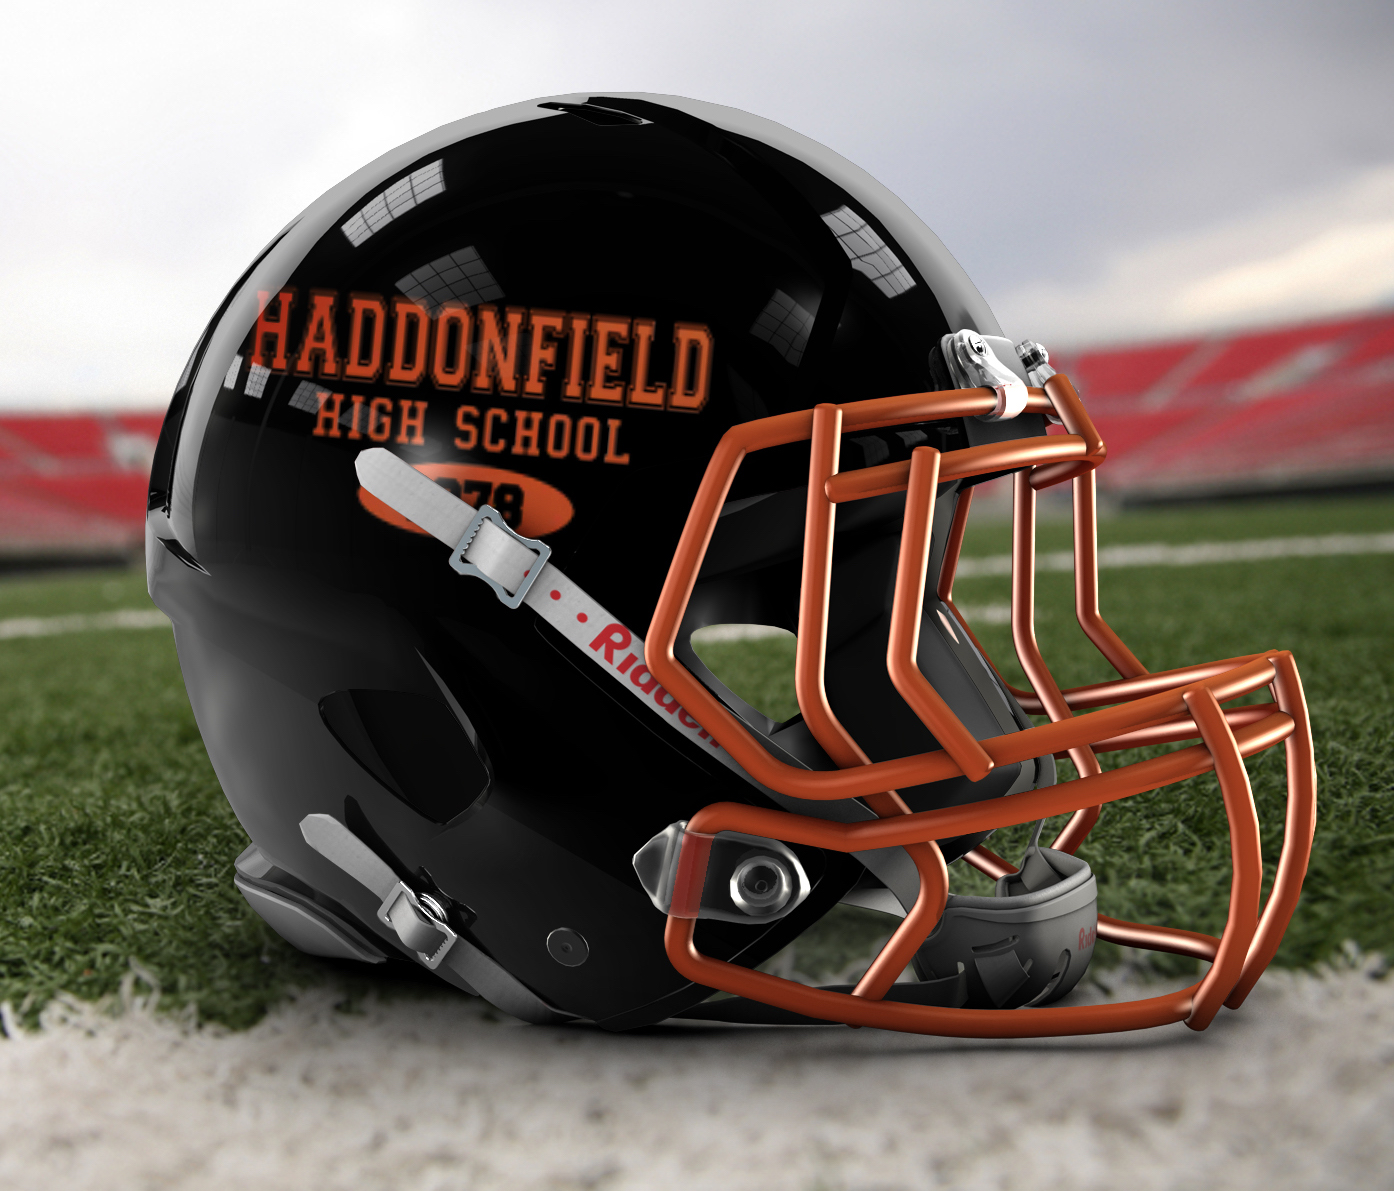 toronto argonauts helmet - Laddonfield High School At Riccre